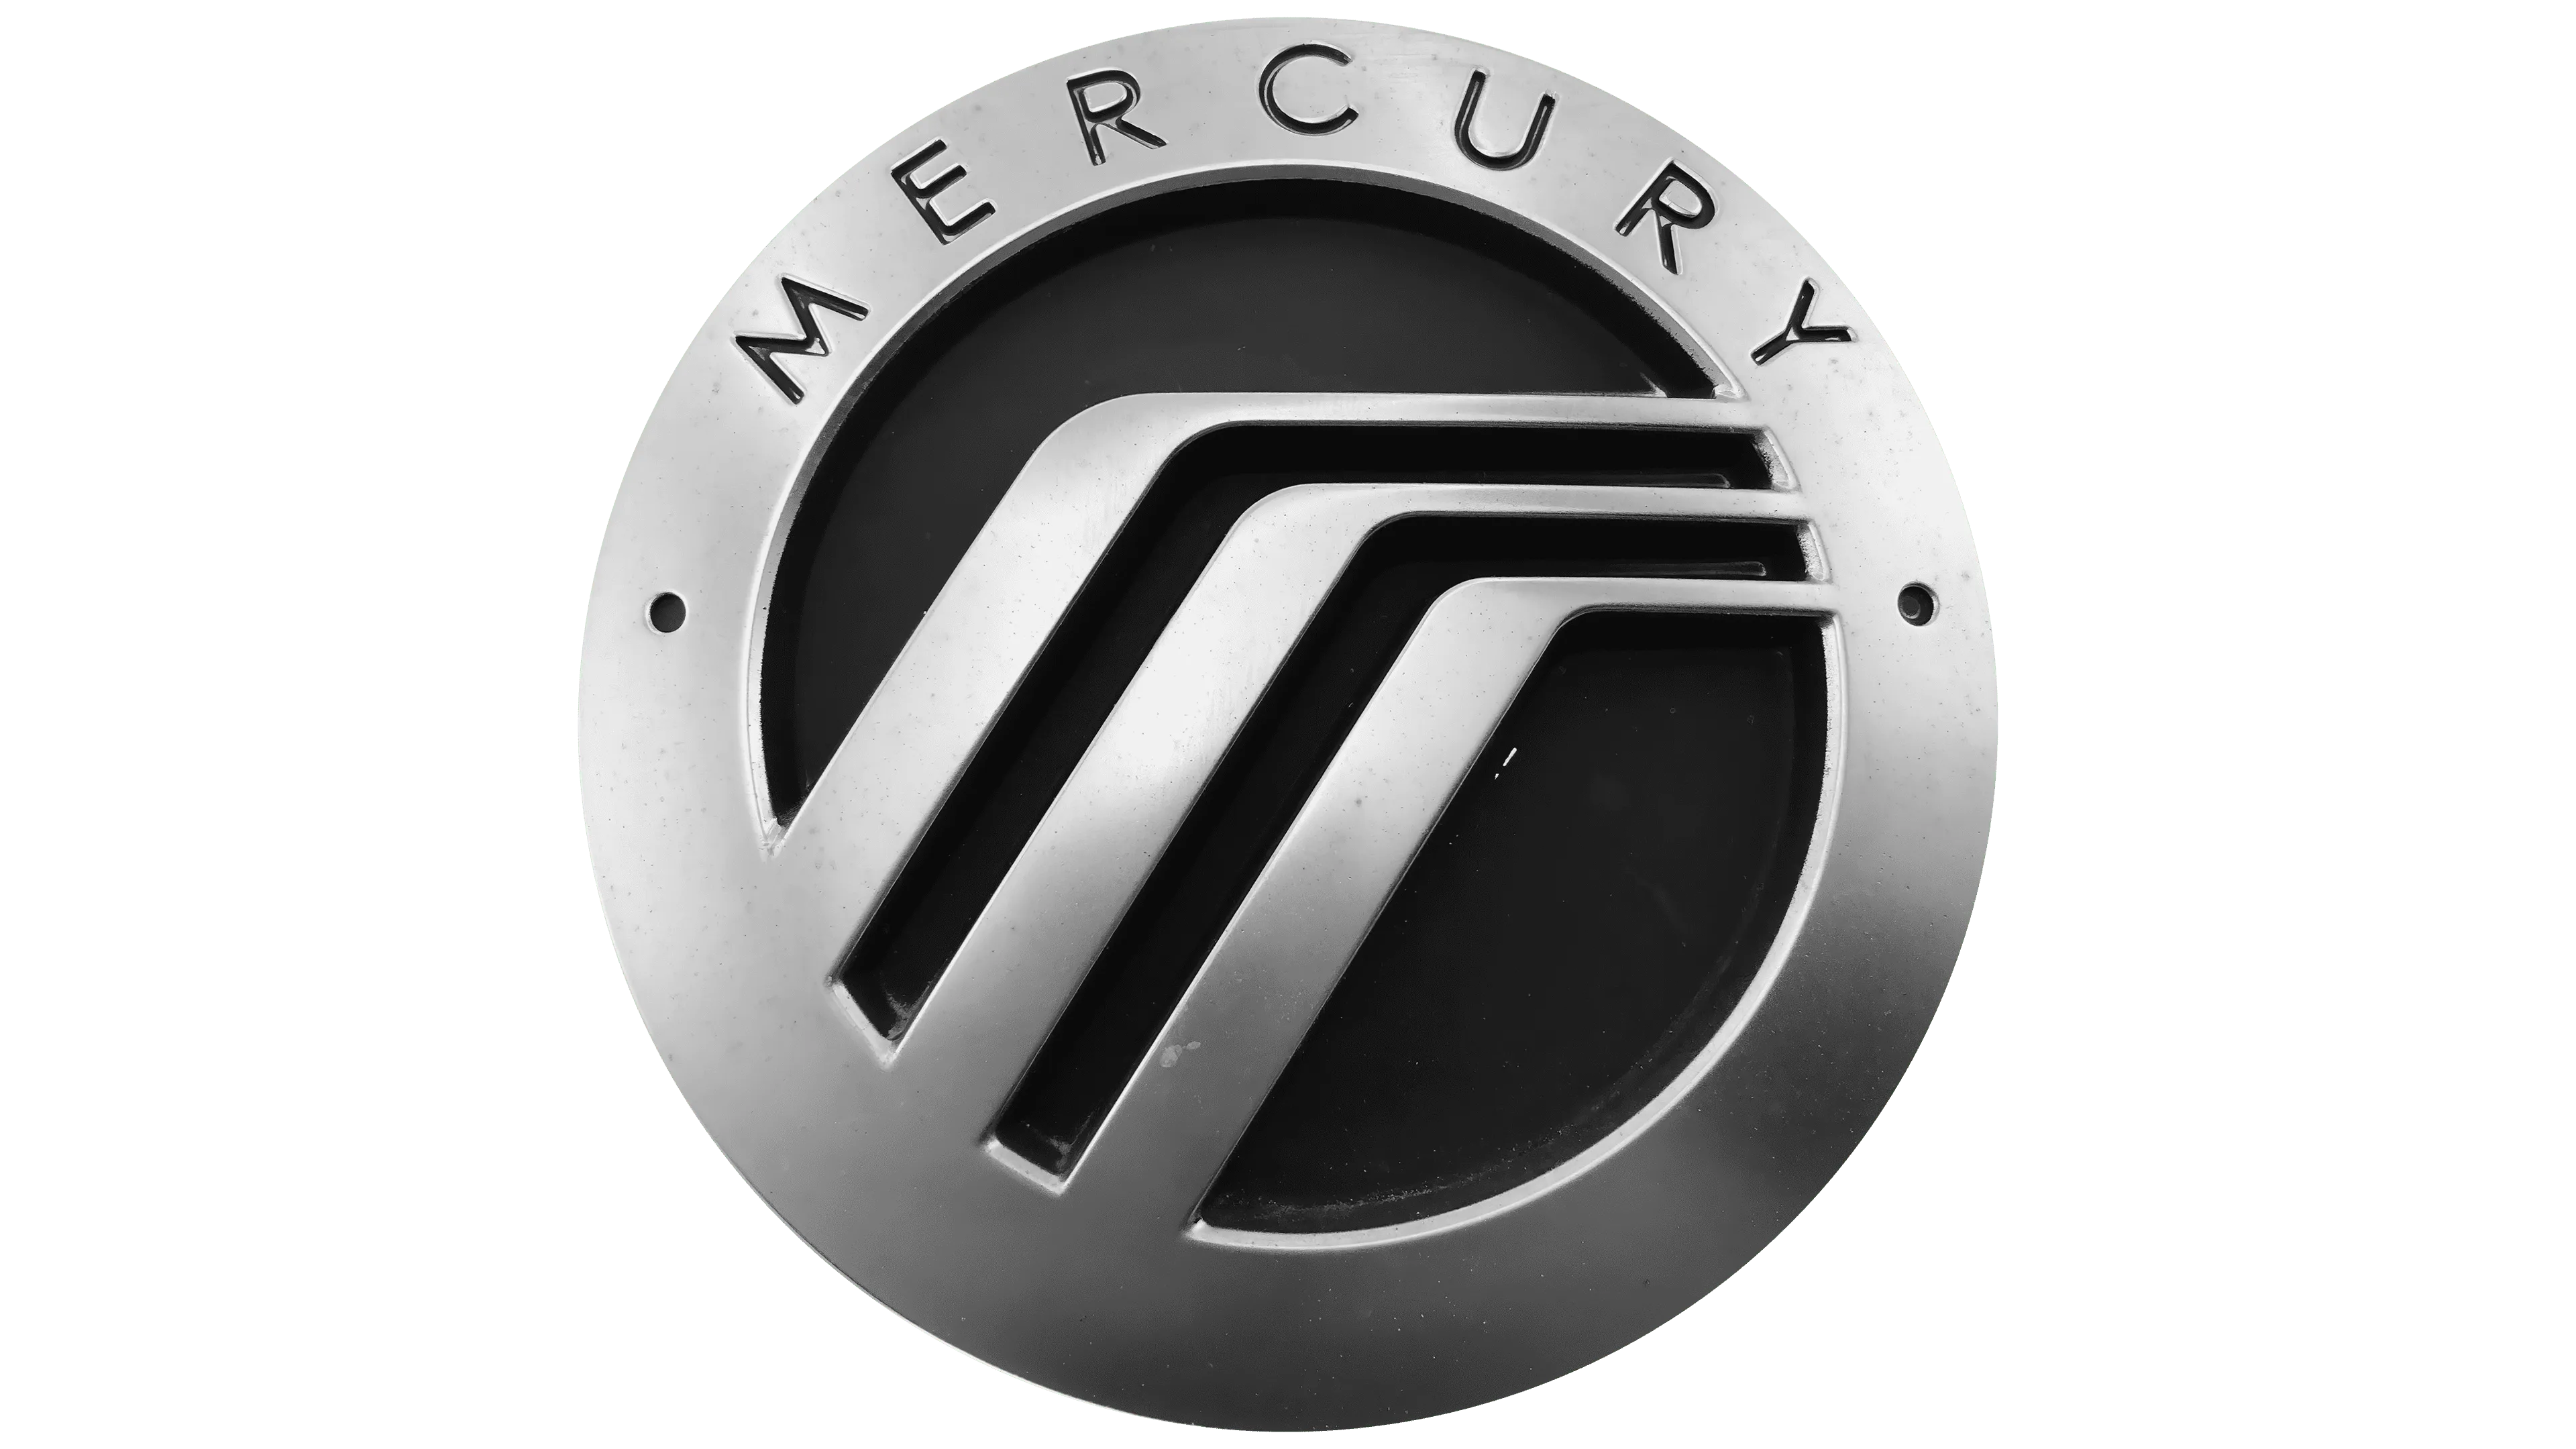 The Mercury logo. Our Boise expert mechanics service all models of Mercury vehicles.